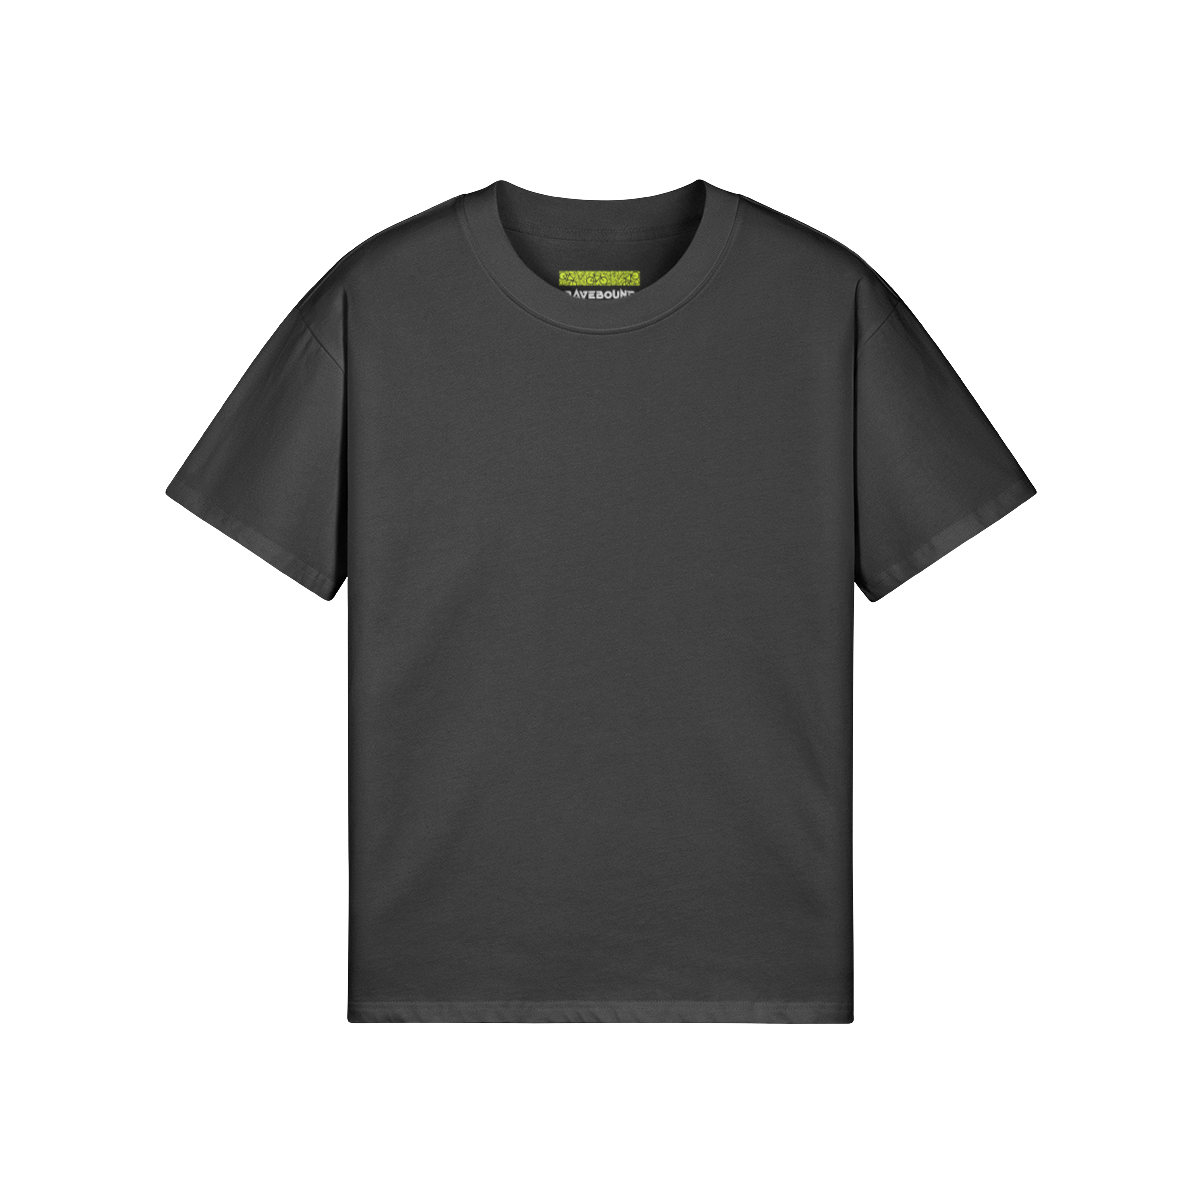 ACID FANTASY (BACK PRINT) - Unisex Oversized T-shirt - front - black